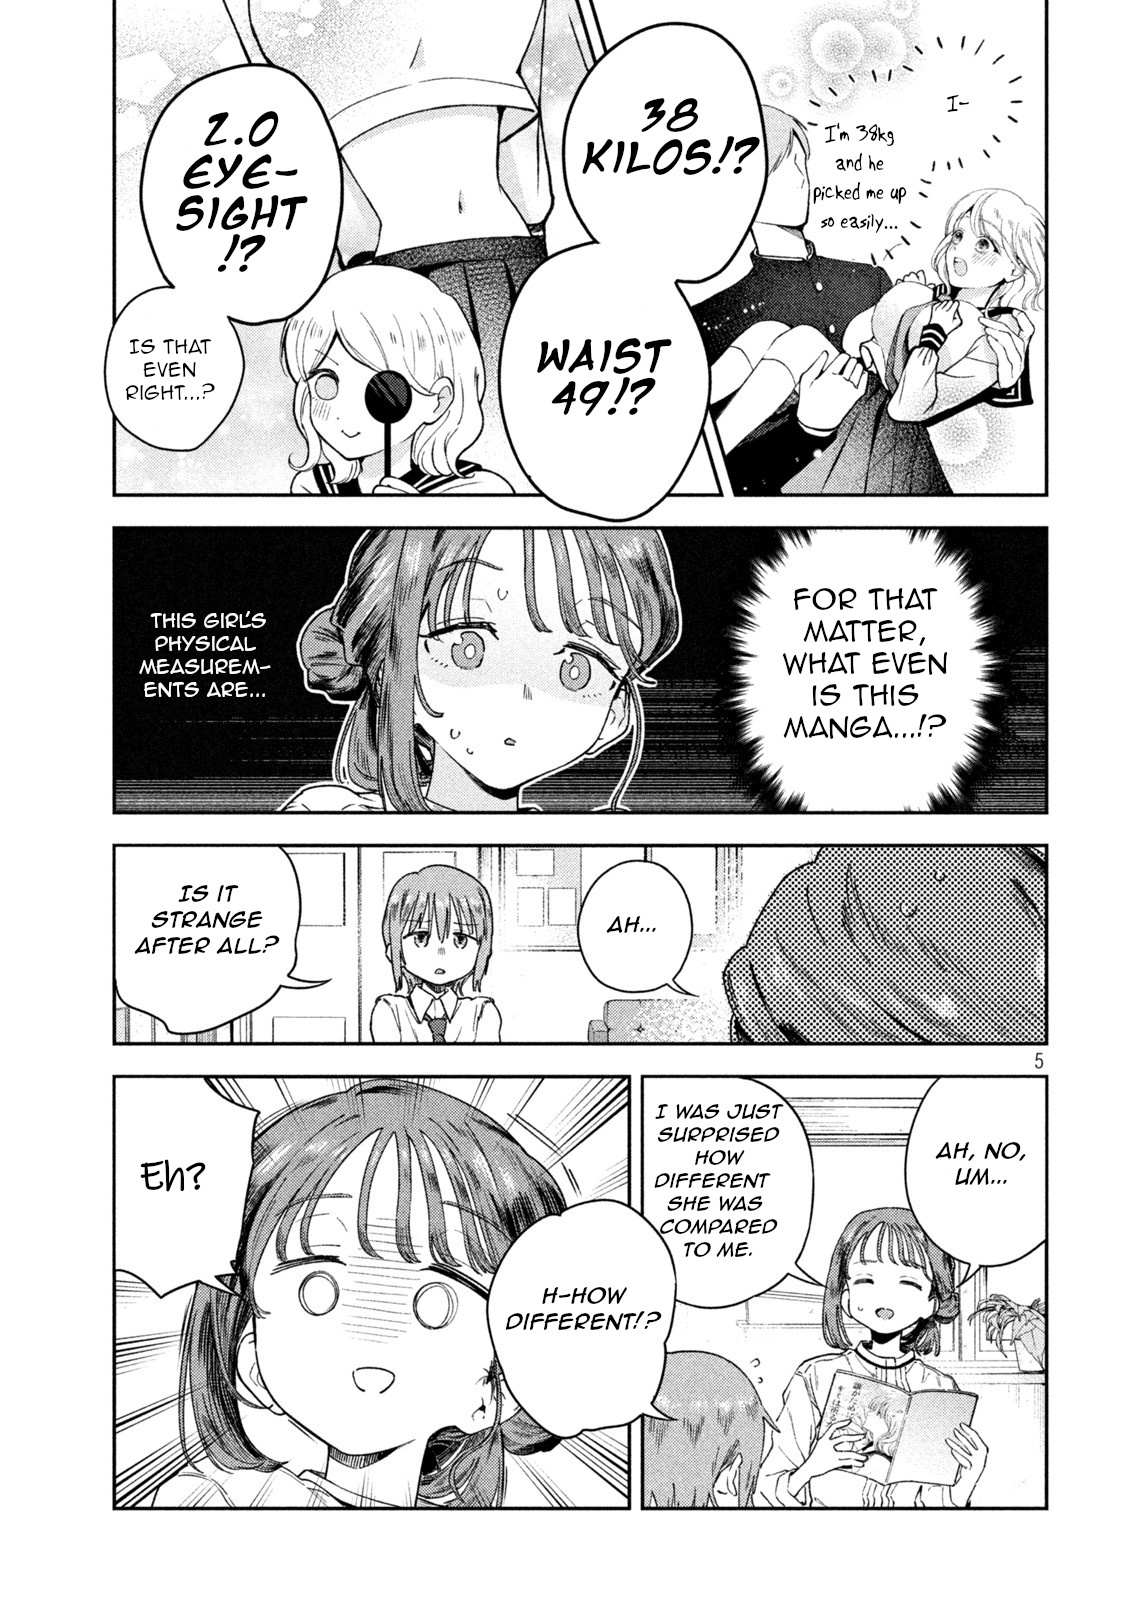 Miyo-Chan Sensei Said So - chapter 3 - #6